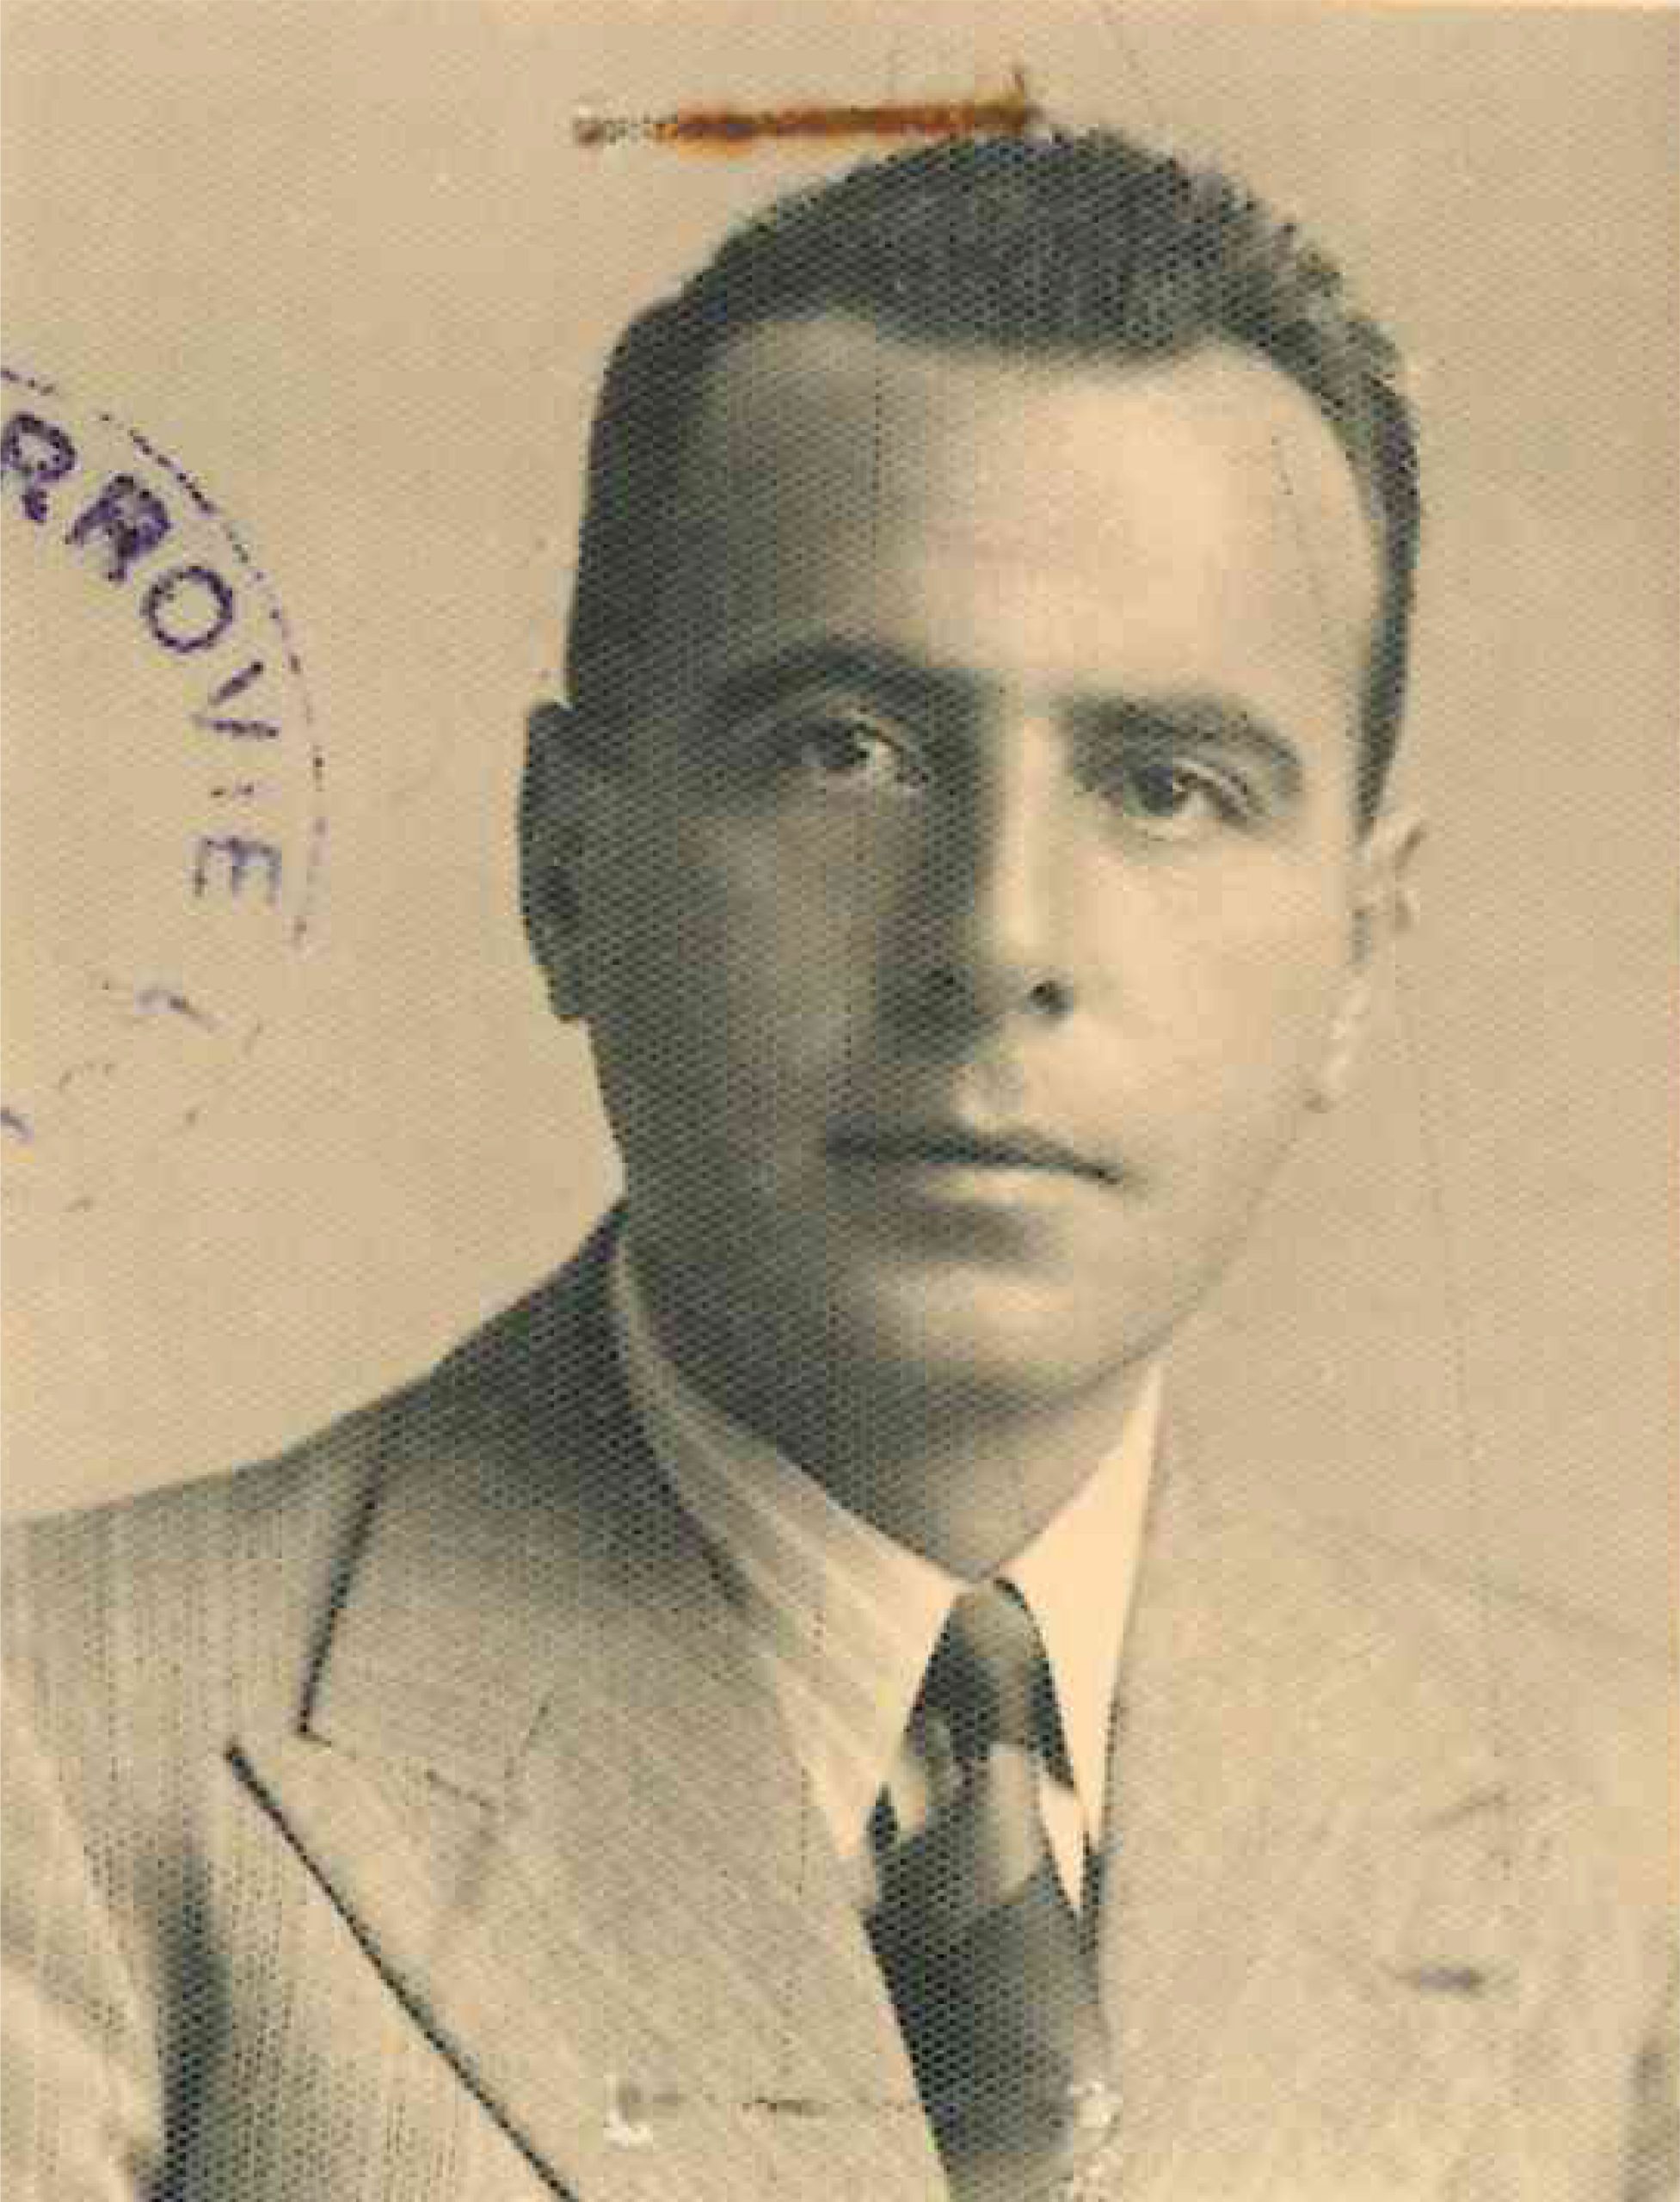 Passport photo of Cesare